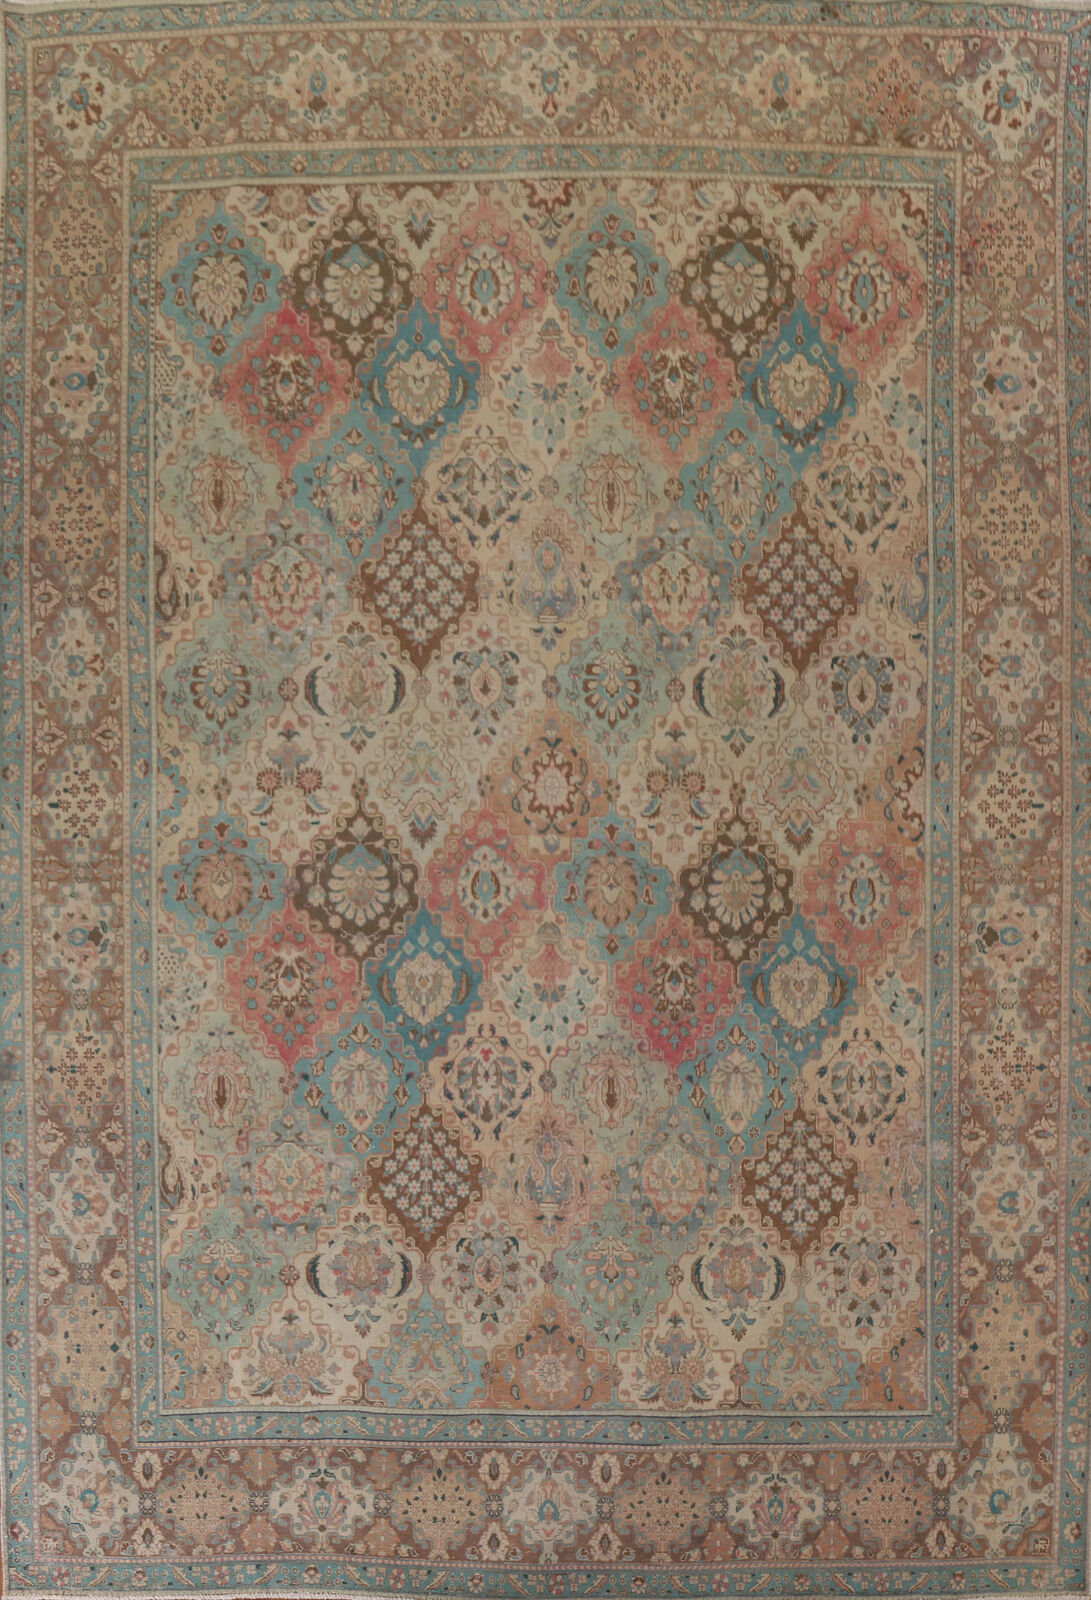 Vegetable Dye Antique Hand-made Tebriz Rug 10x12 Wool Living Room Carpet